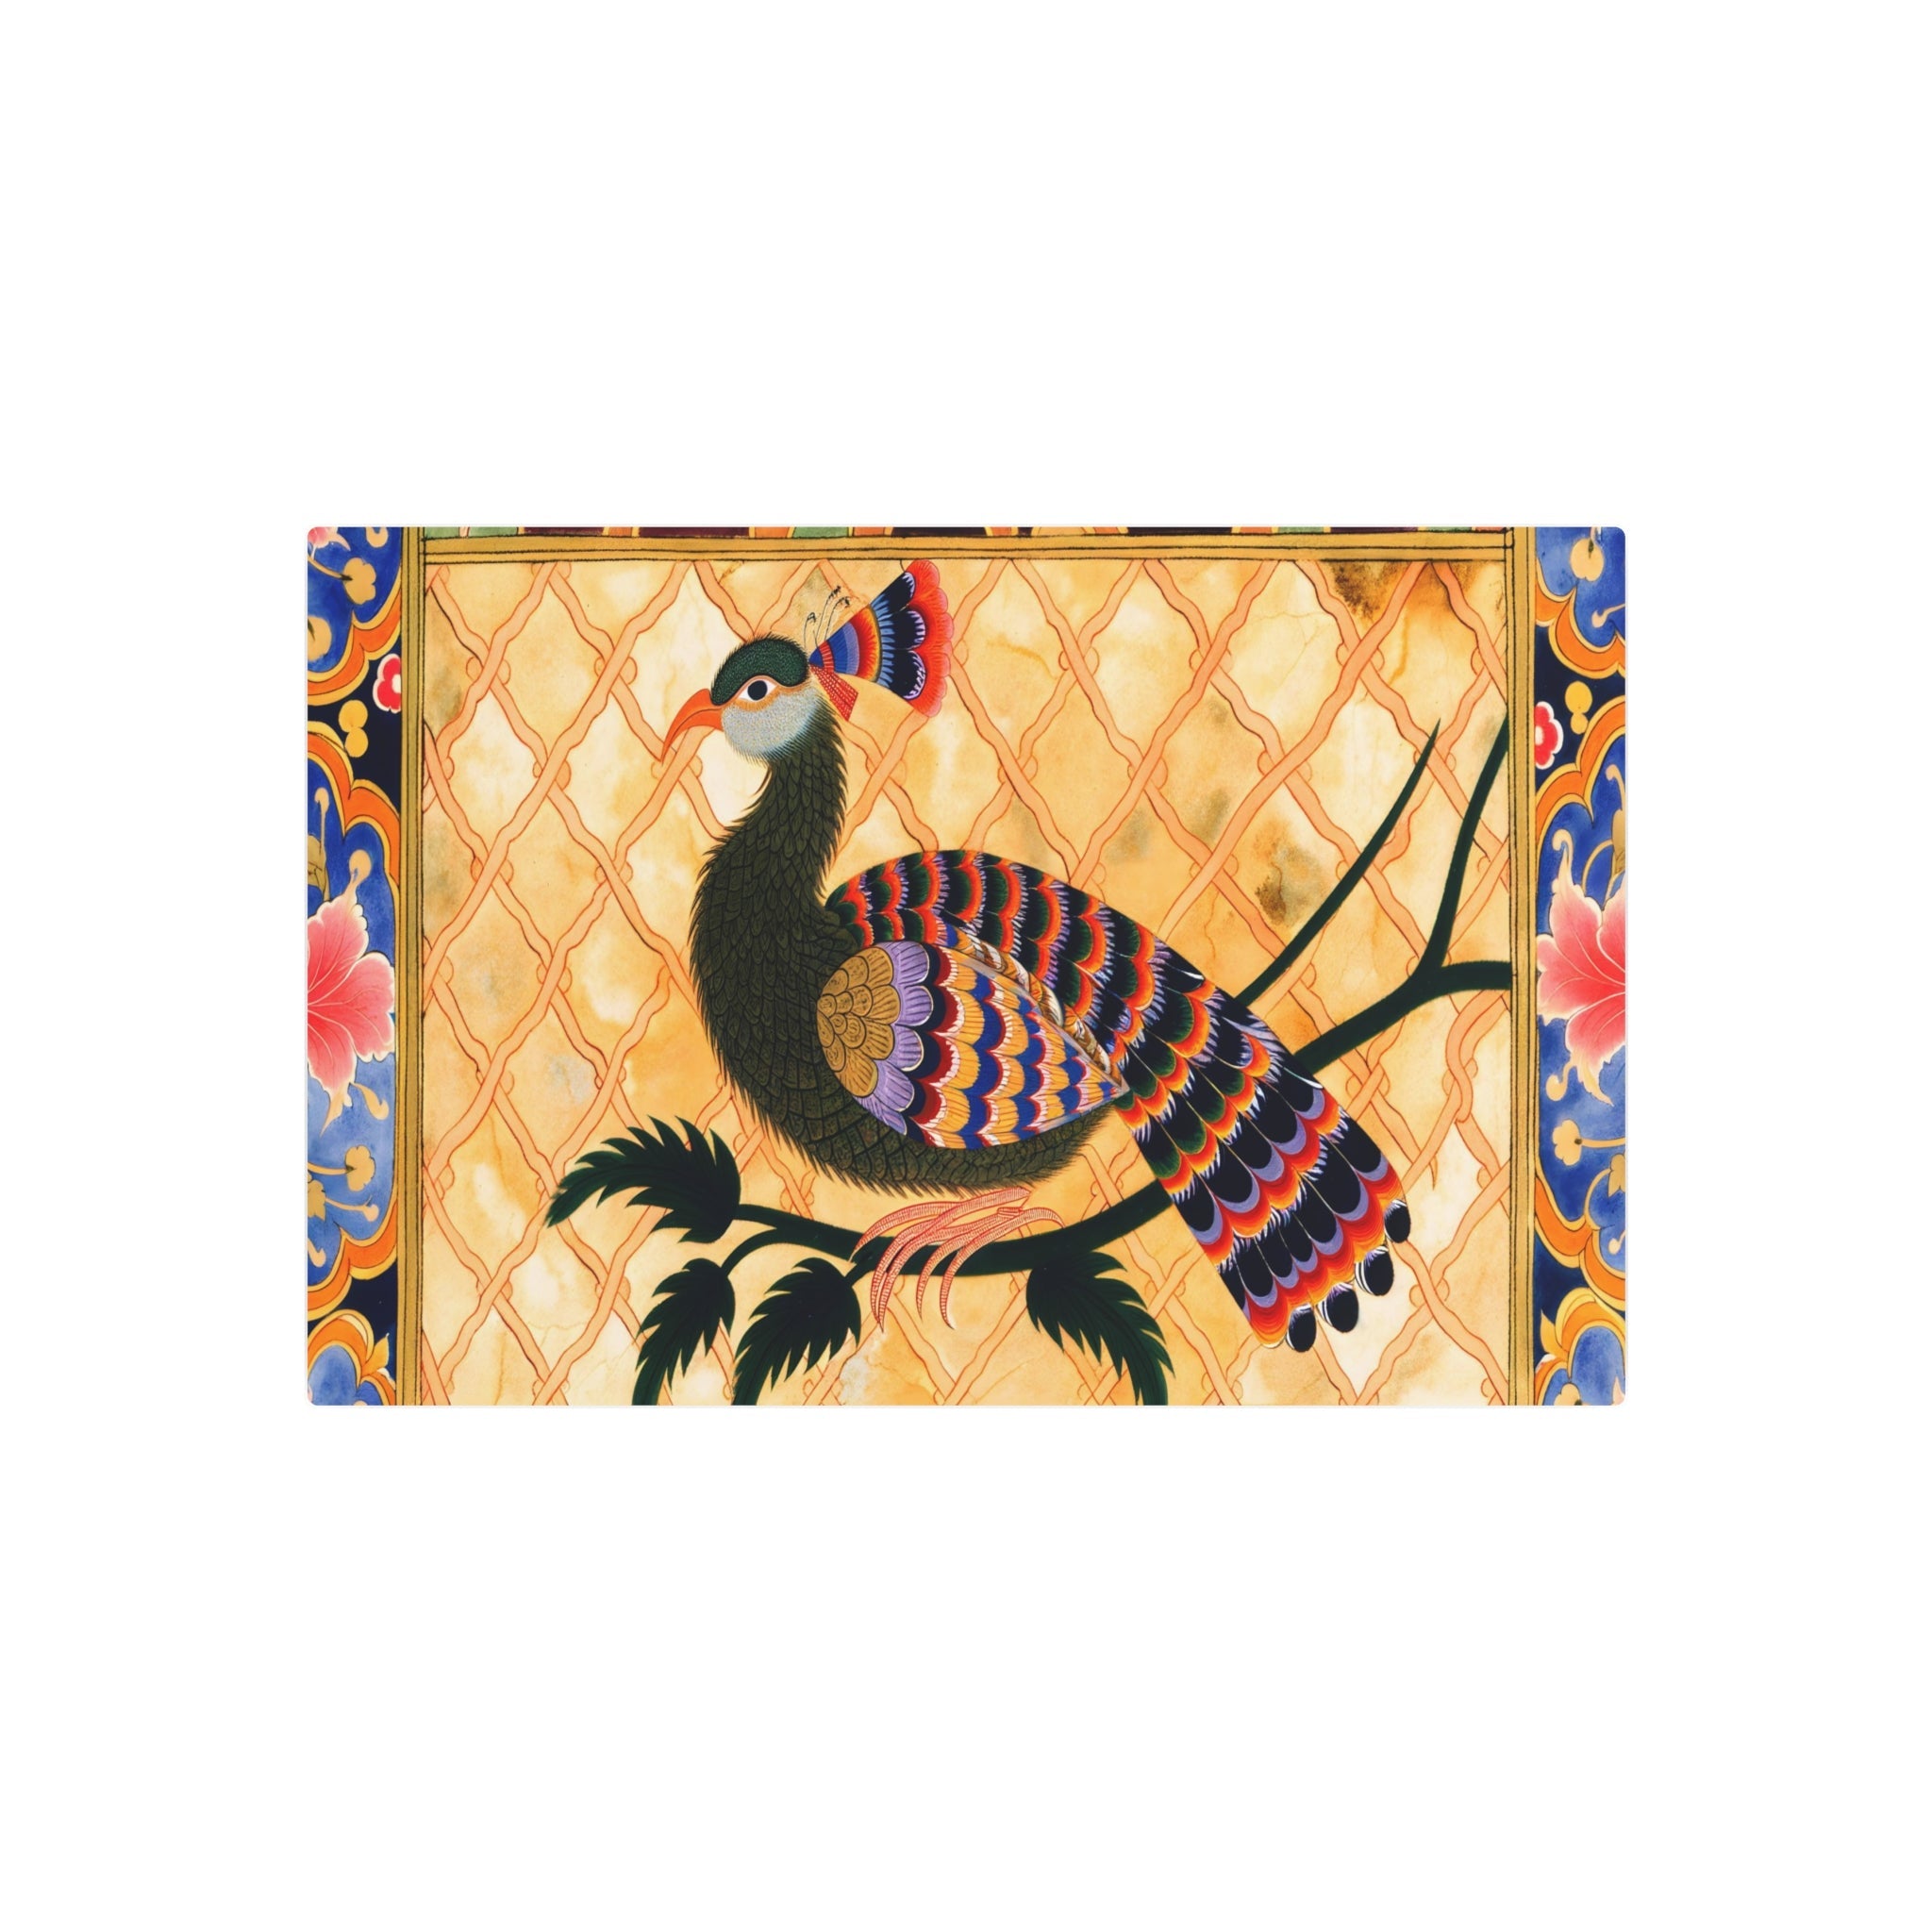 Metal Poster Art | "Mughal Miniature South Asian Artwork - Traditionally Rich, Intricate Bird Design in Vivid Mughal Colors - Non-Western & - Metal Poster Art 30″ x 20″ (Horizontal) 0.12''